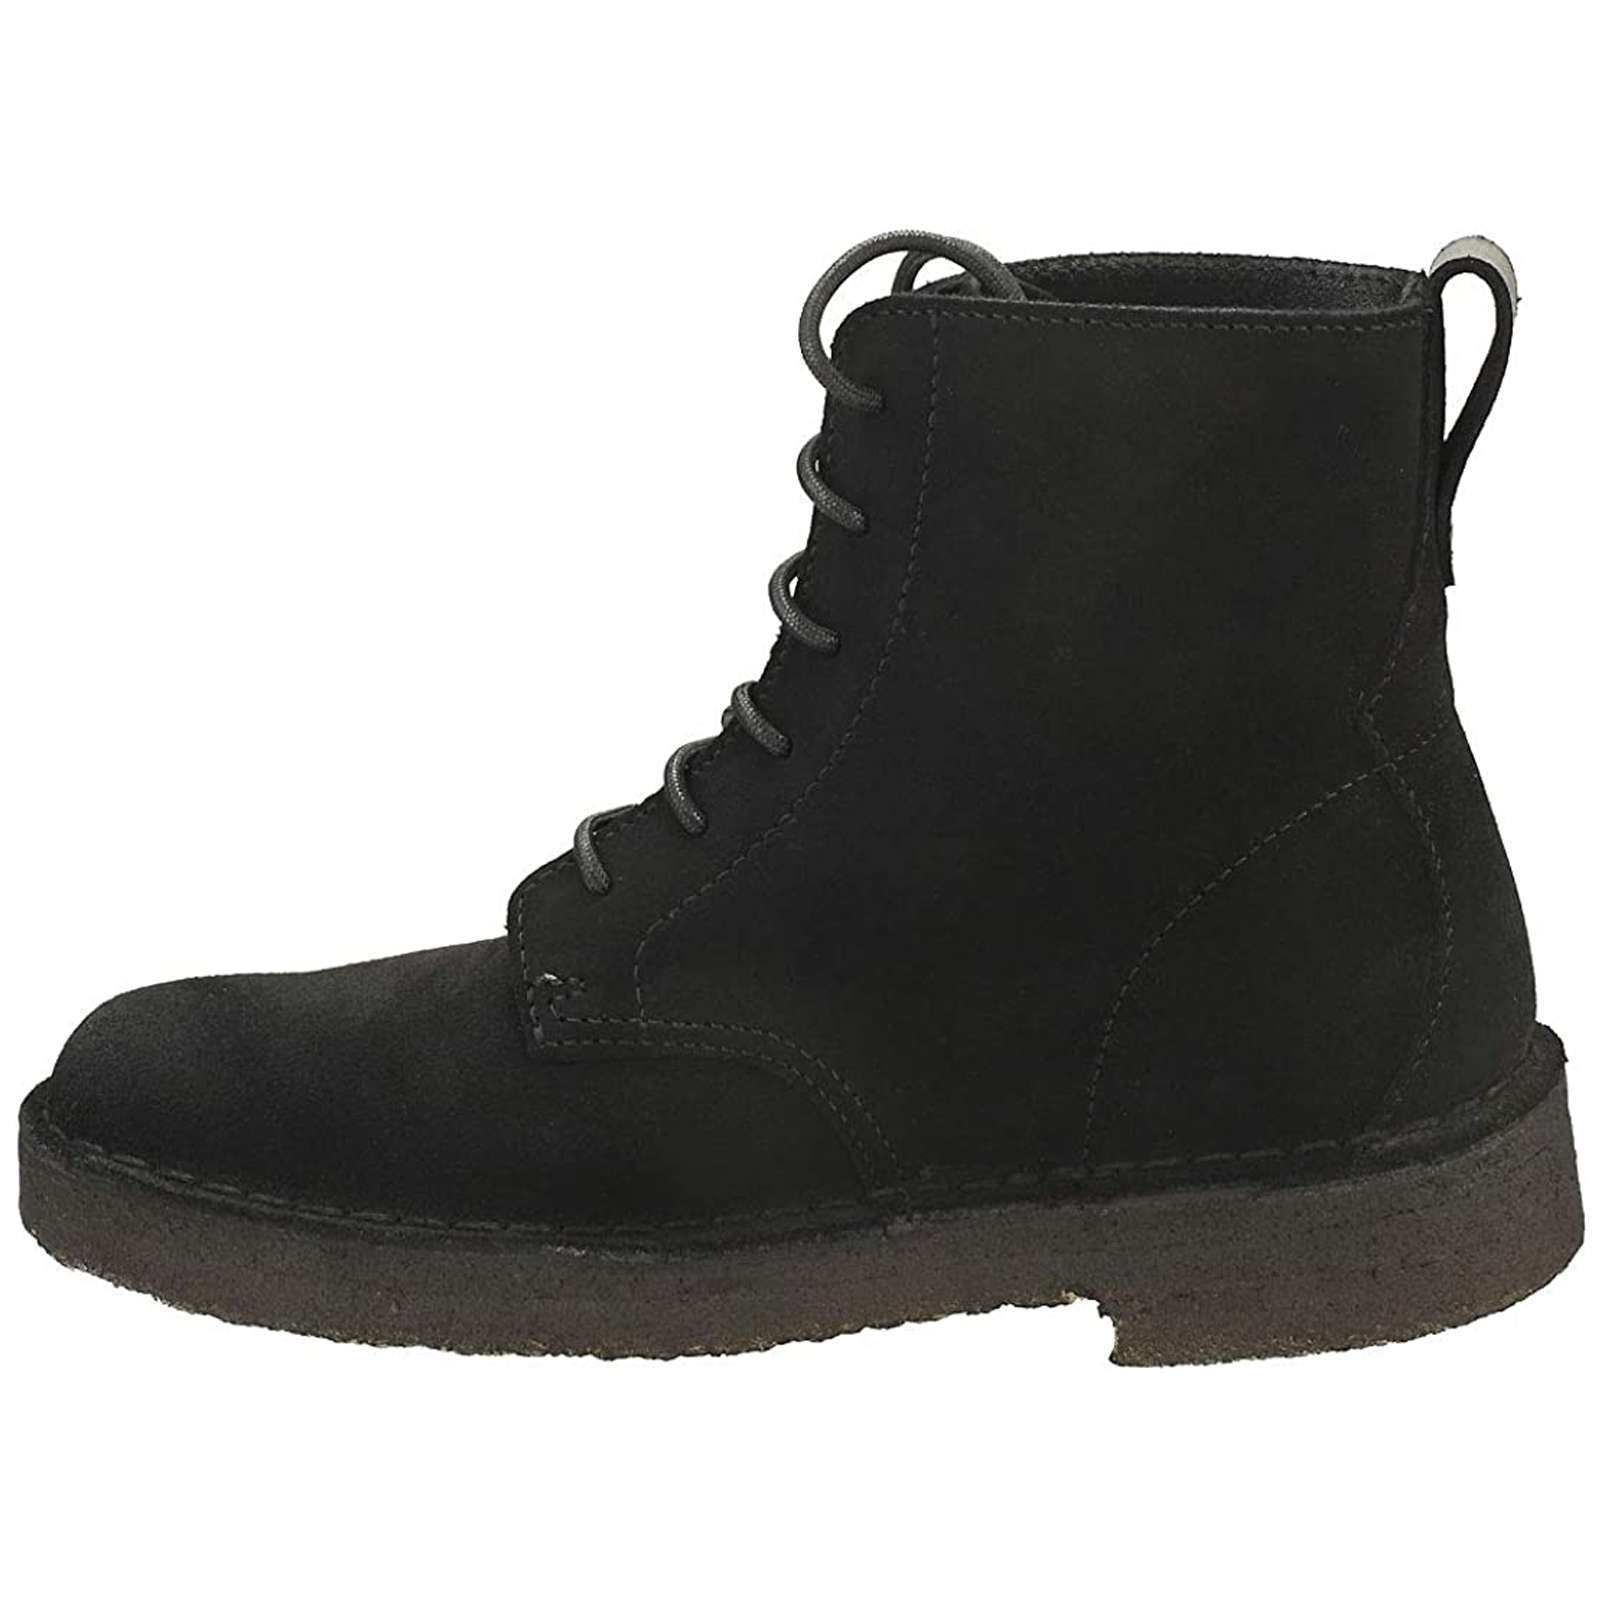 Clarks Originals Desert Mali Suede Leather Women's Ankle Boots#color_black